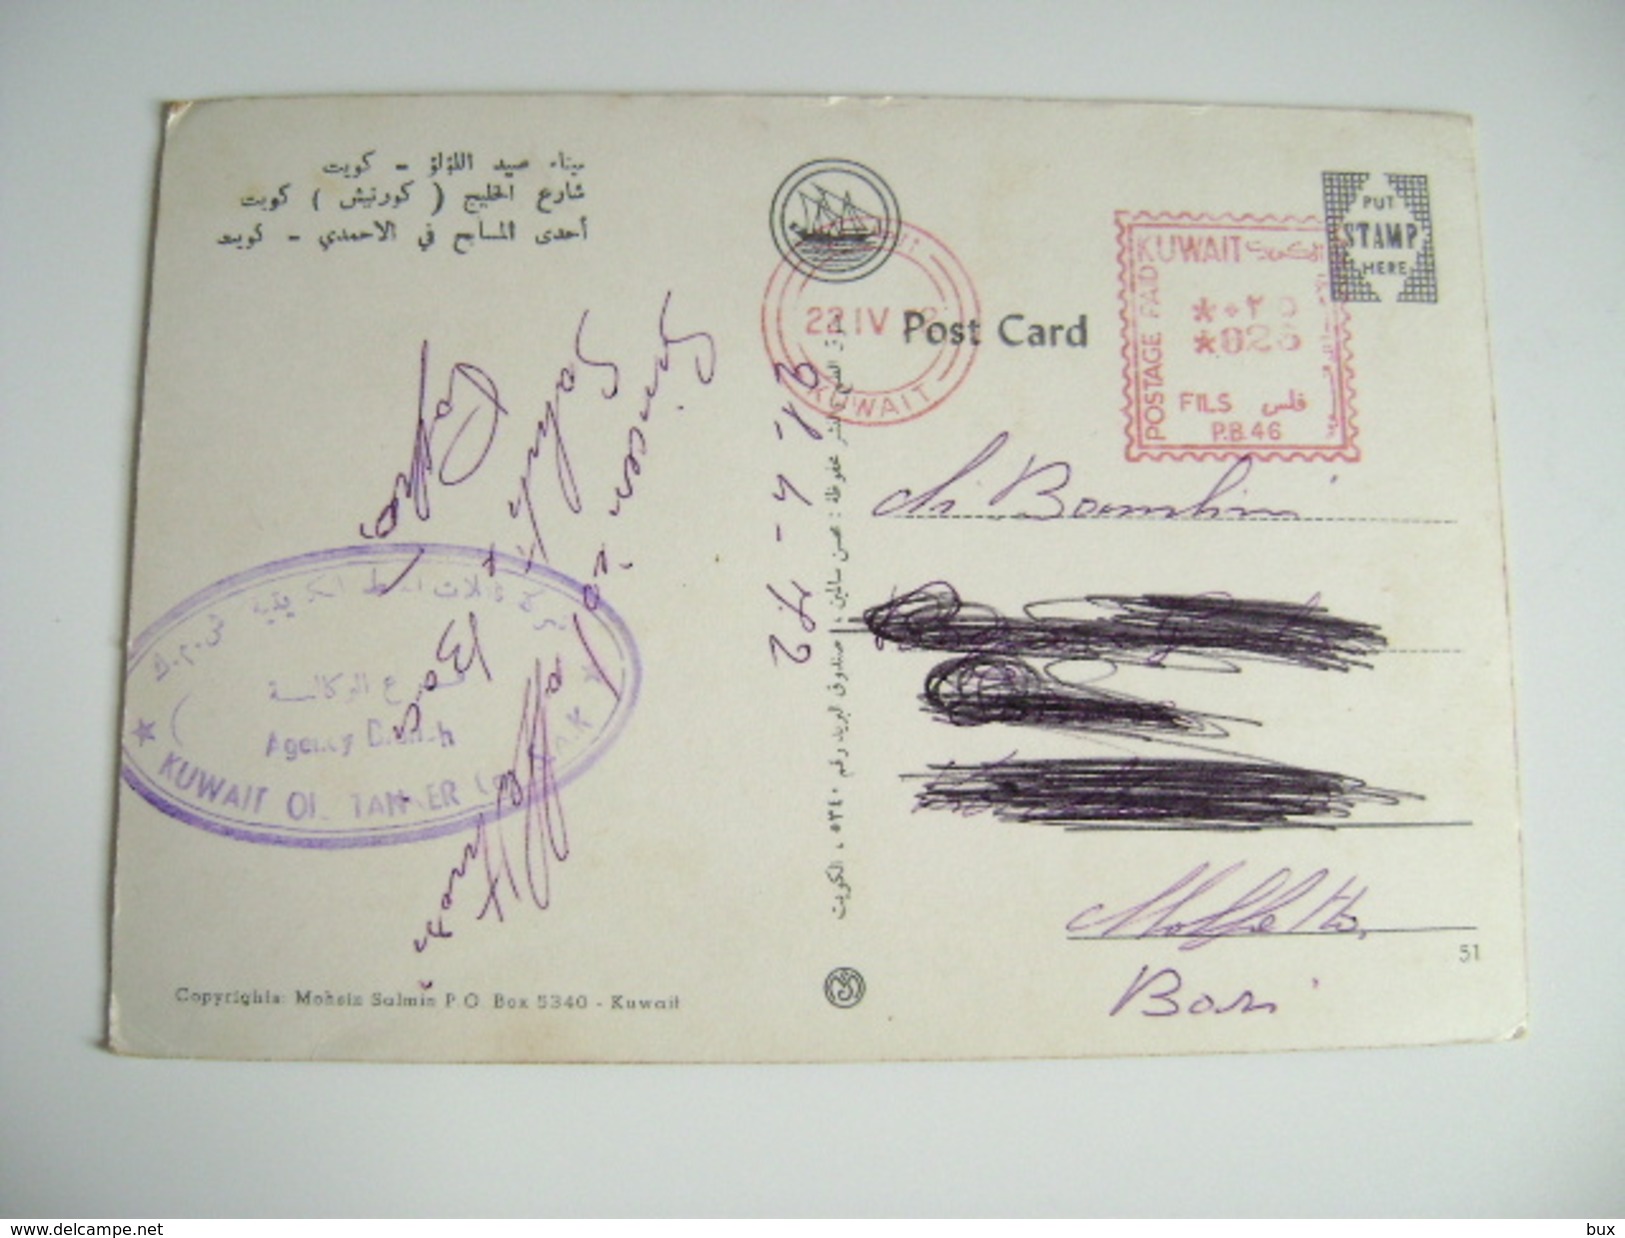 1972  KUWAIT   TIMBRE  Kuwait Oil Tanker   Agency Branch  Marine   PIN  UP  FEMME BIKINI  COSTUME  POSTCARD  USED - Kuwait